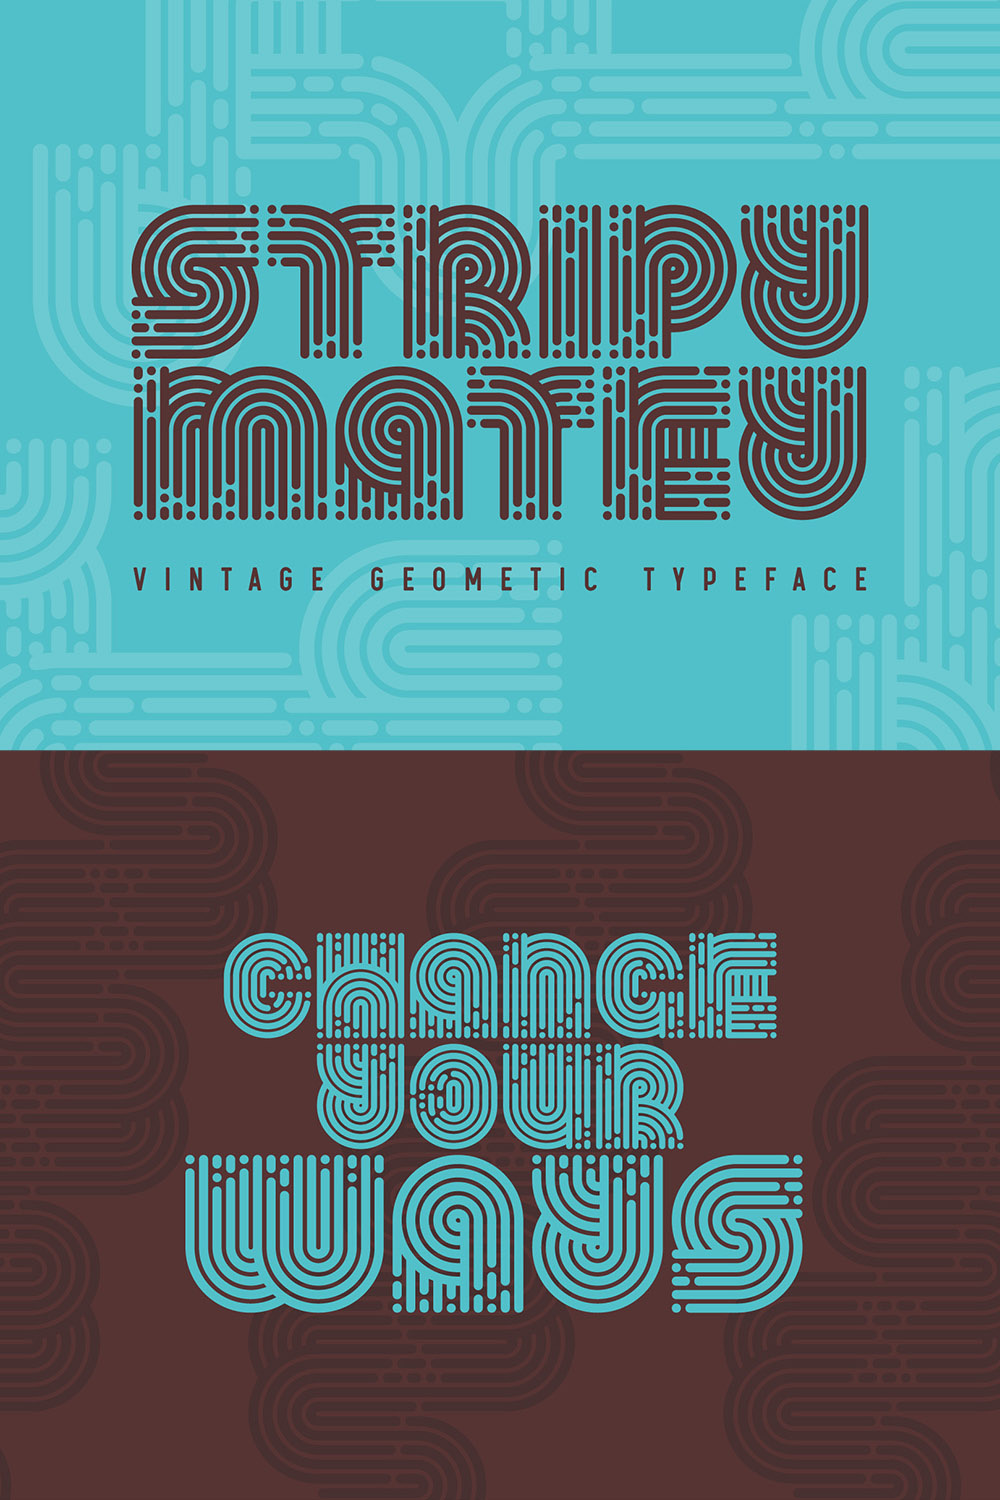 Stripy Matey - Geometric Font pinterest preview image.